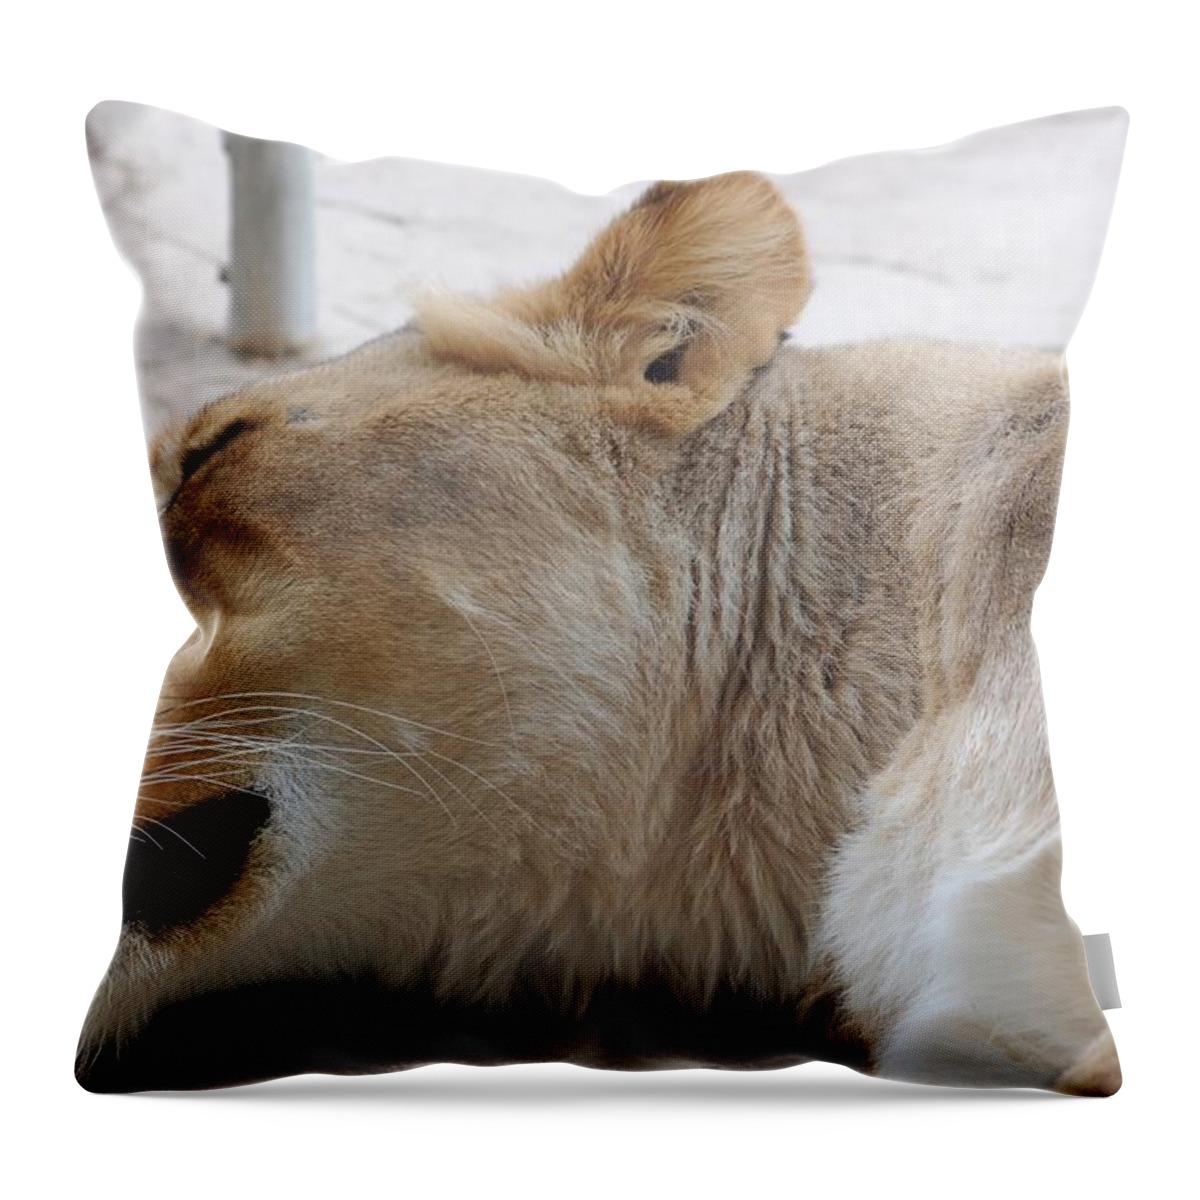 Lioness Throw Pillow featuring the photograph Sleeping Lioness by Susan Garren